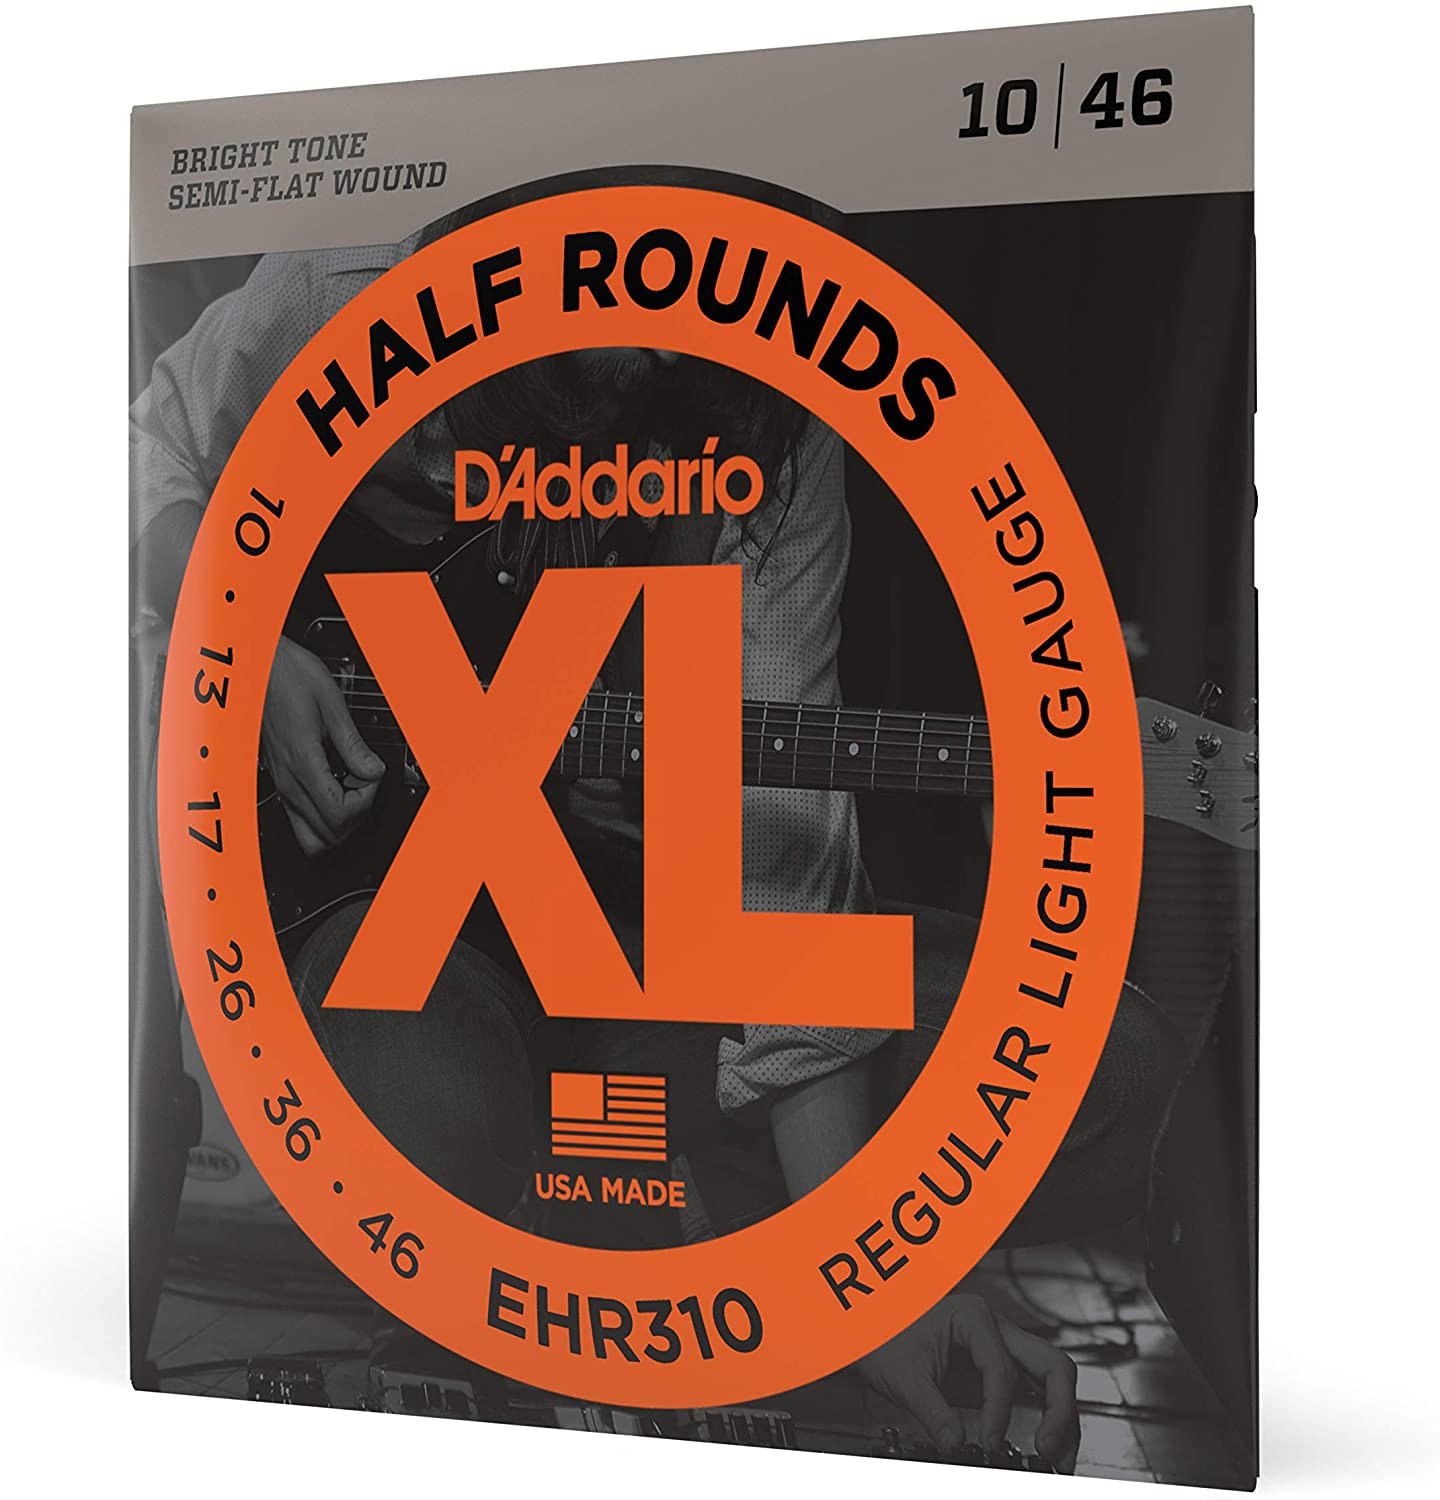 D'Addario XL Half Round Electric Guitar Strings